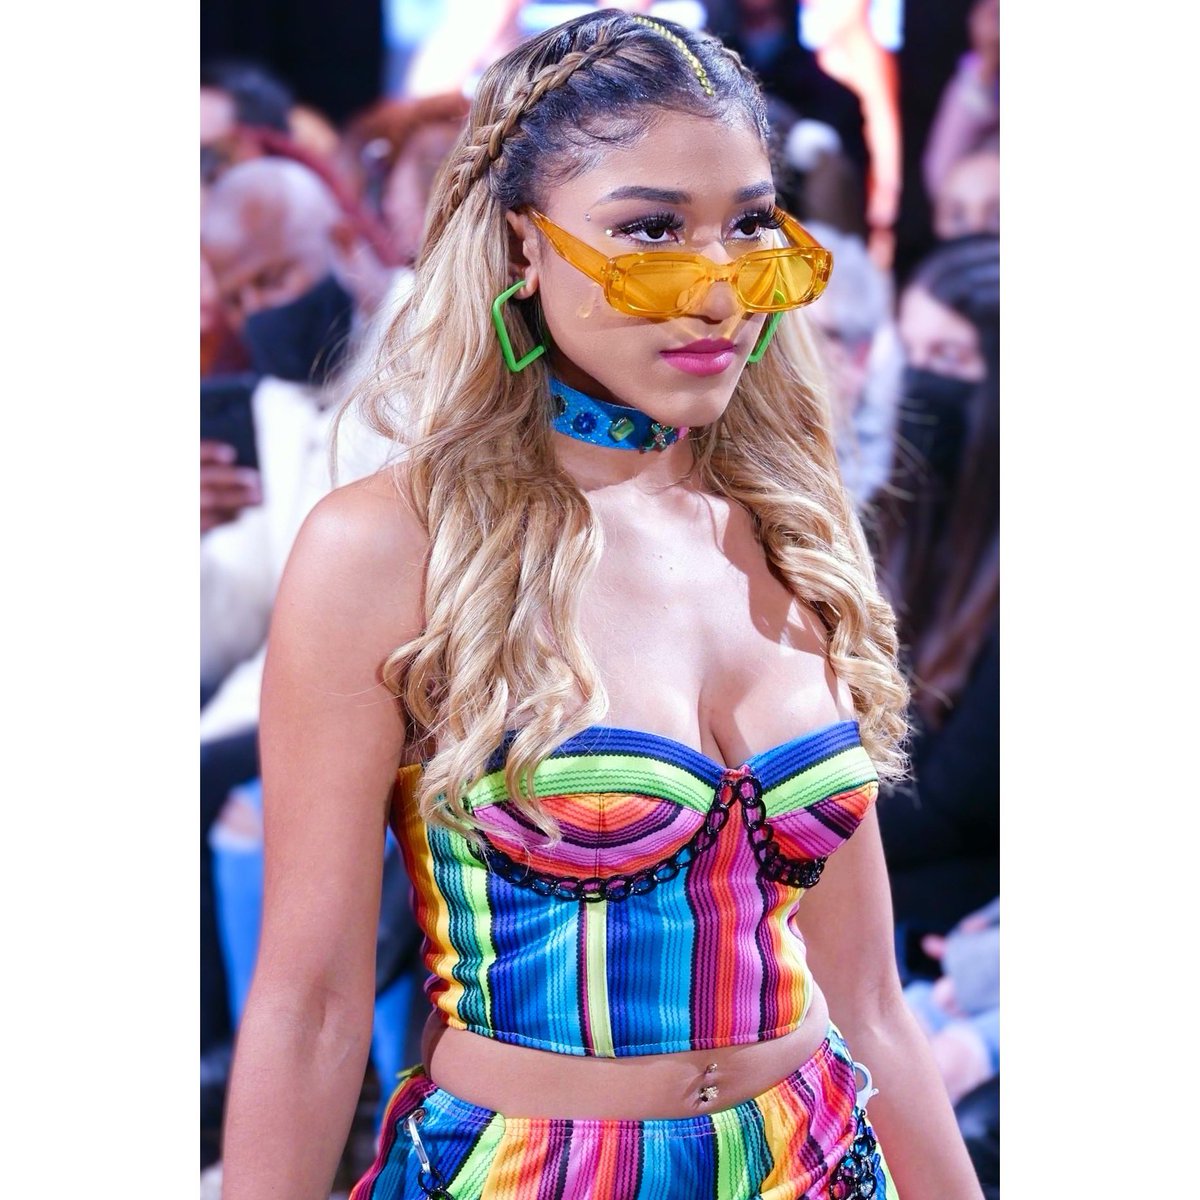 Model wears a #rainbow #corsettop designed by @marisasantiagotoro 

#runway360 #nyfw #fashiondesigner #fashion #runwaywalk #walktherunway #nycfashionweek #nycfashionphotographer #emergingdesigner #upandcomingdesigner #escapestudiosllc #hair #makeup #braids #sunglasses #fashion